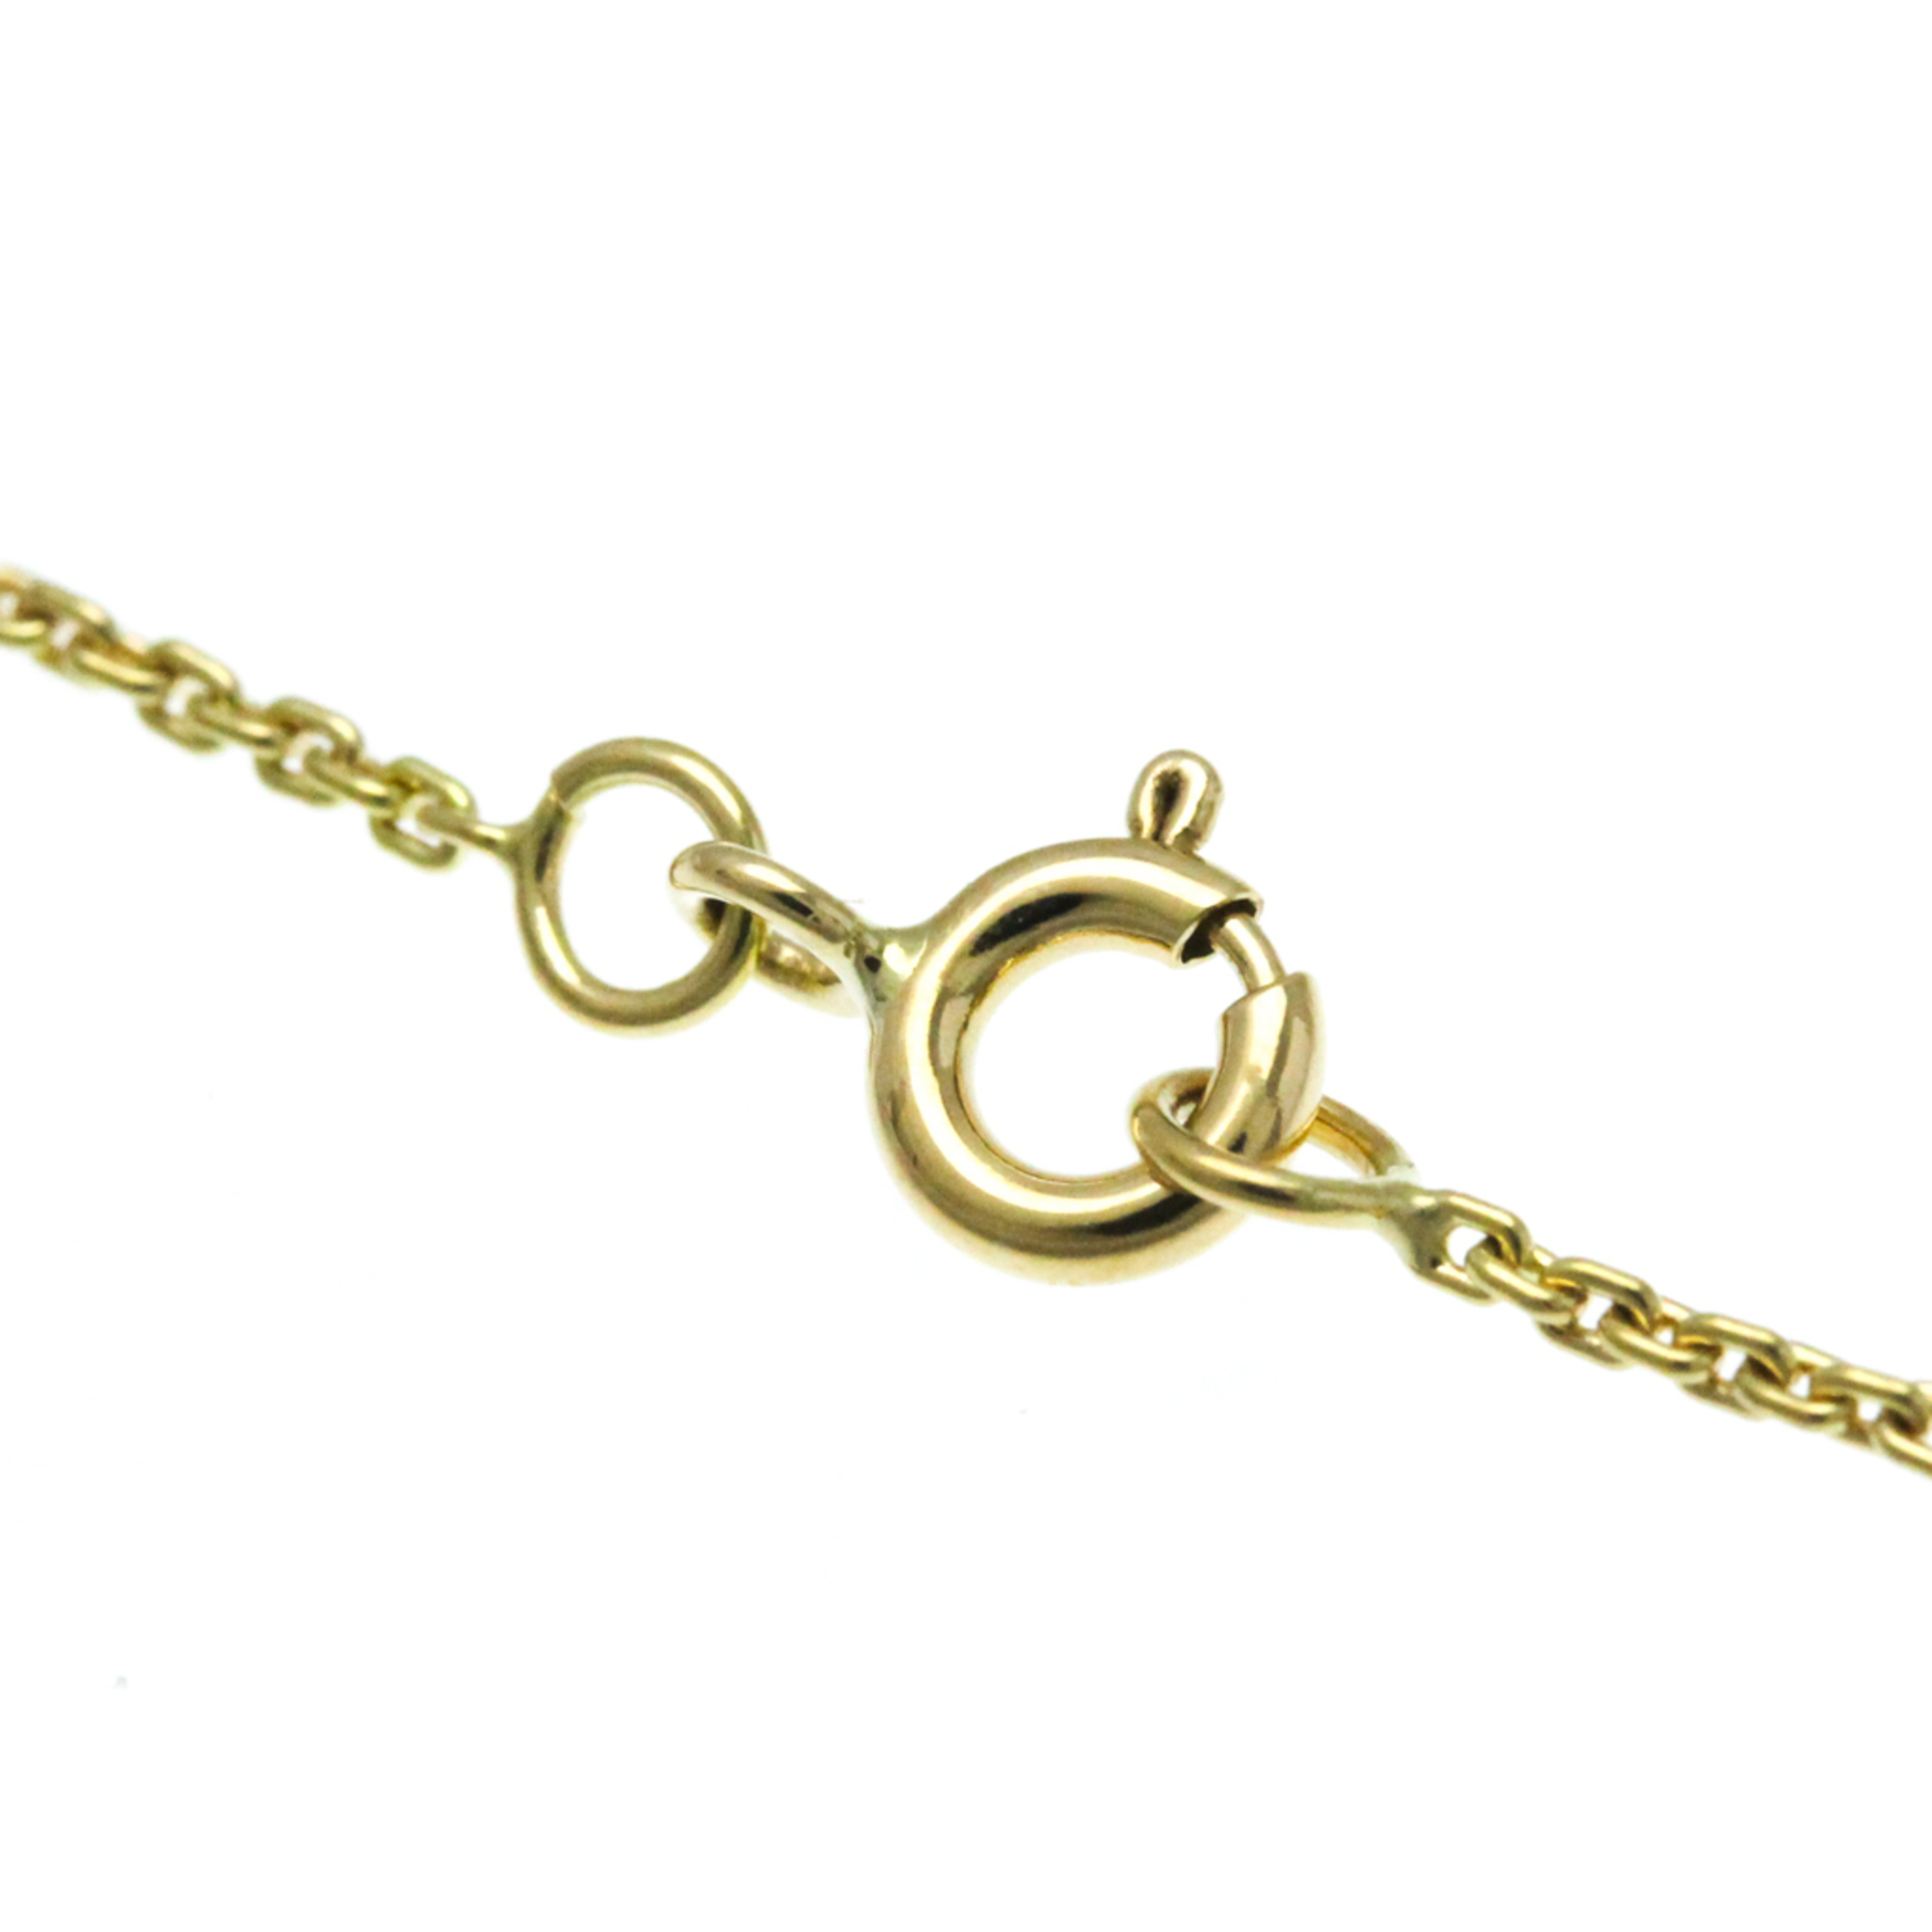 Louis Vuitton LV Volt One Small Pendant Q93805 Yellow Gold (18K) Diamond Men,Women Fashion Pendant Necklace Carat/0.03 (Gold)